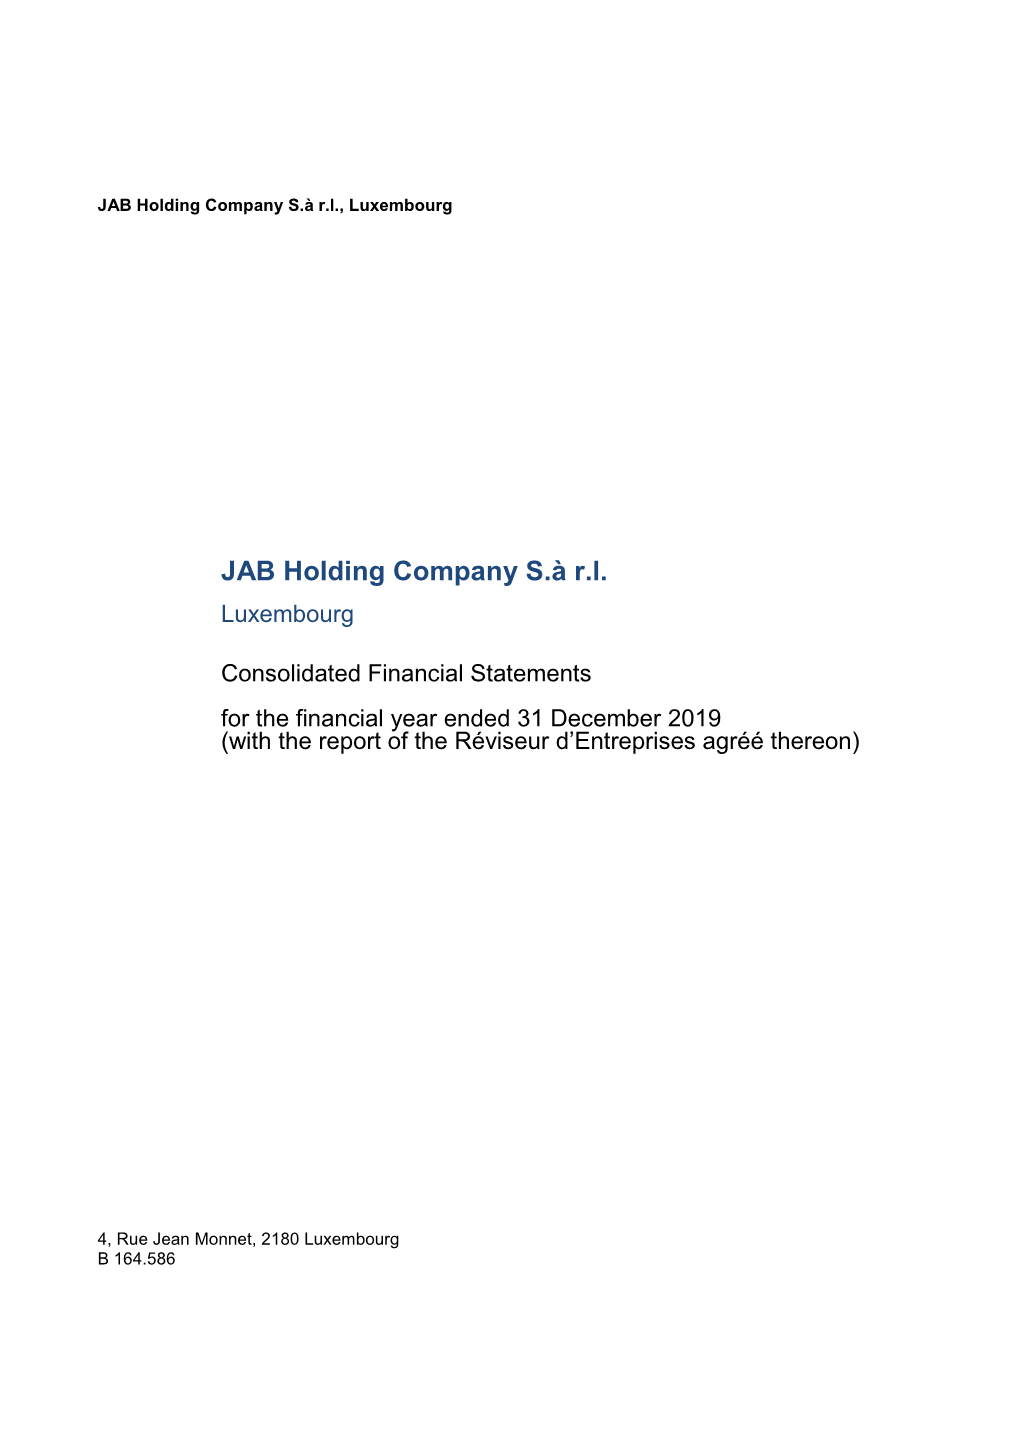 JAB Holdings B.V., JAB Cosmetics B.V., JAB Forest B.V., JAB Holding Sao Paulo Ltda